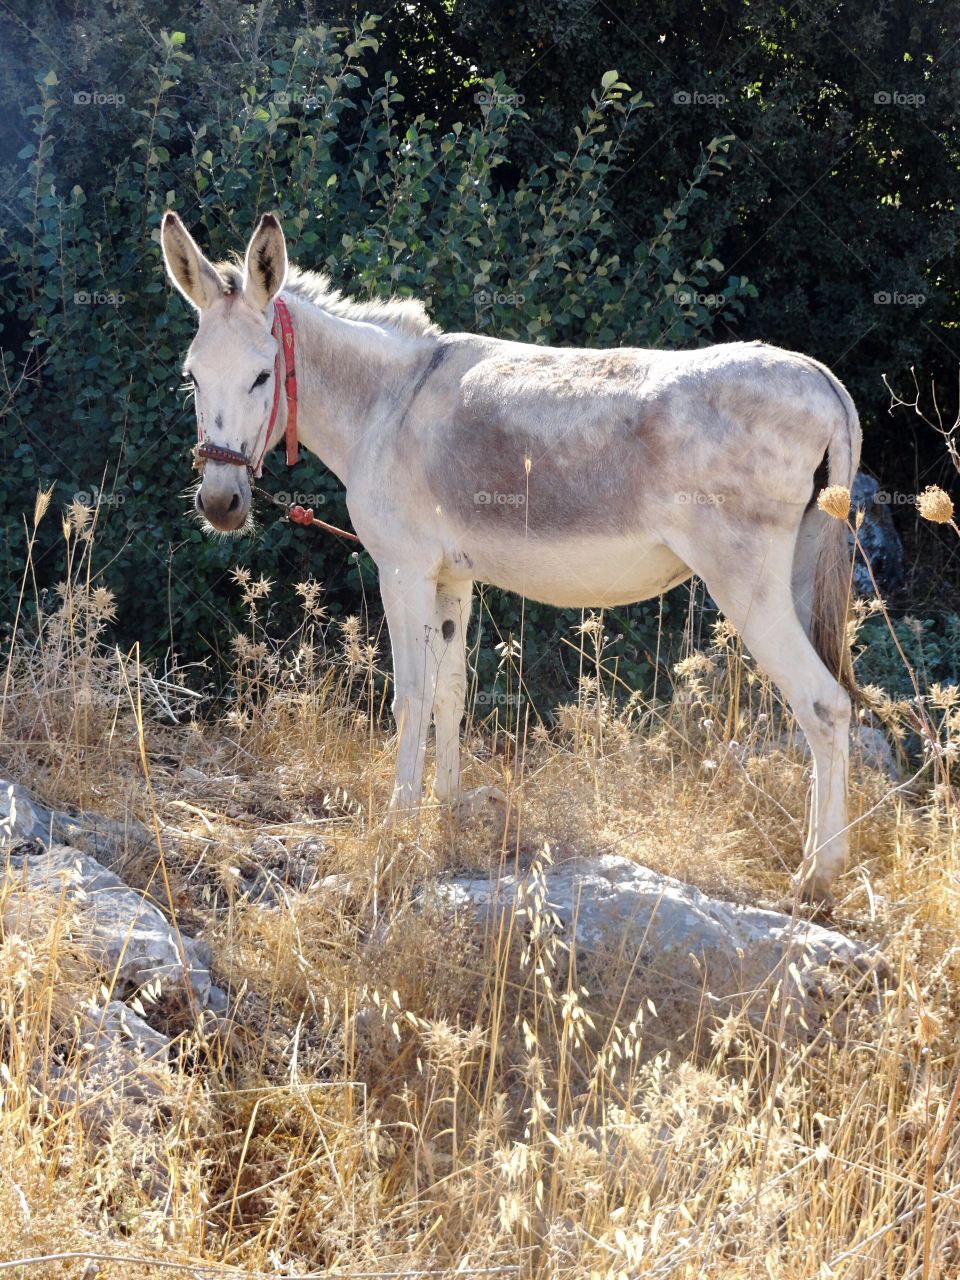 Donkey from kfarhouna Lebanon 